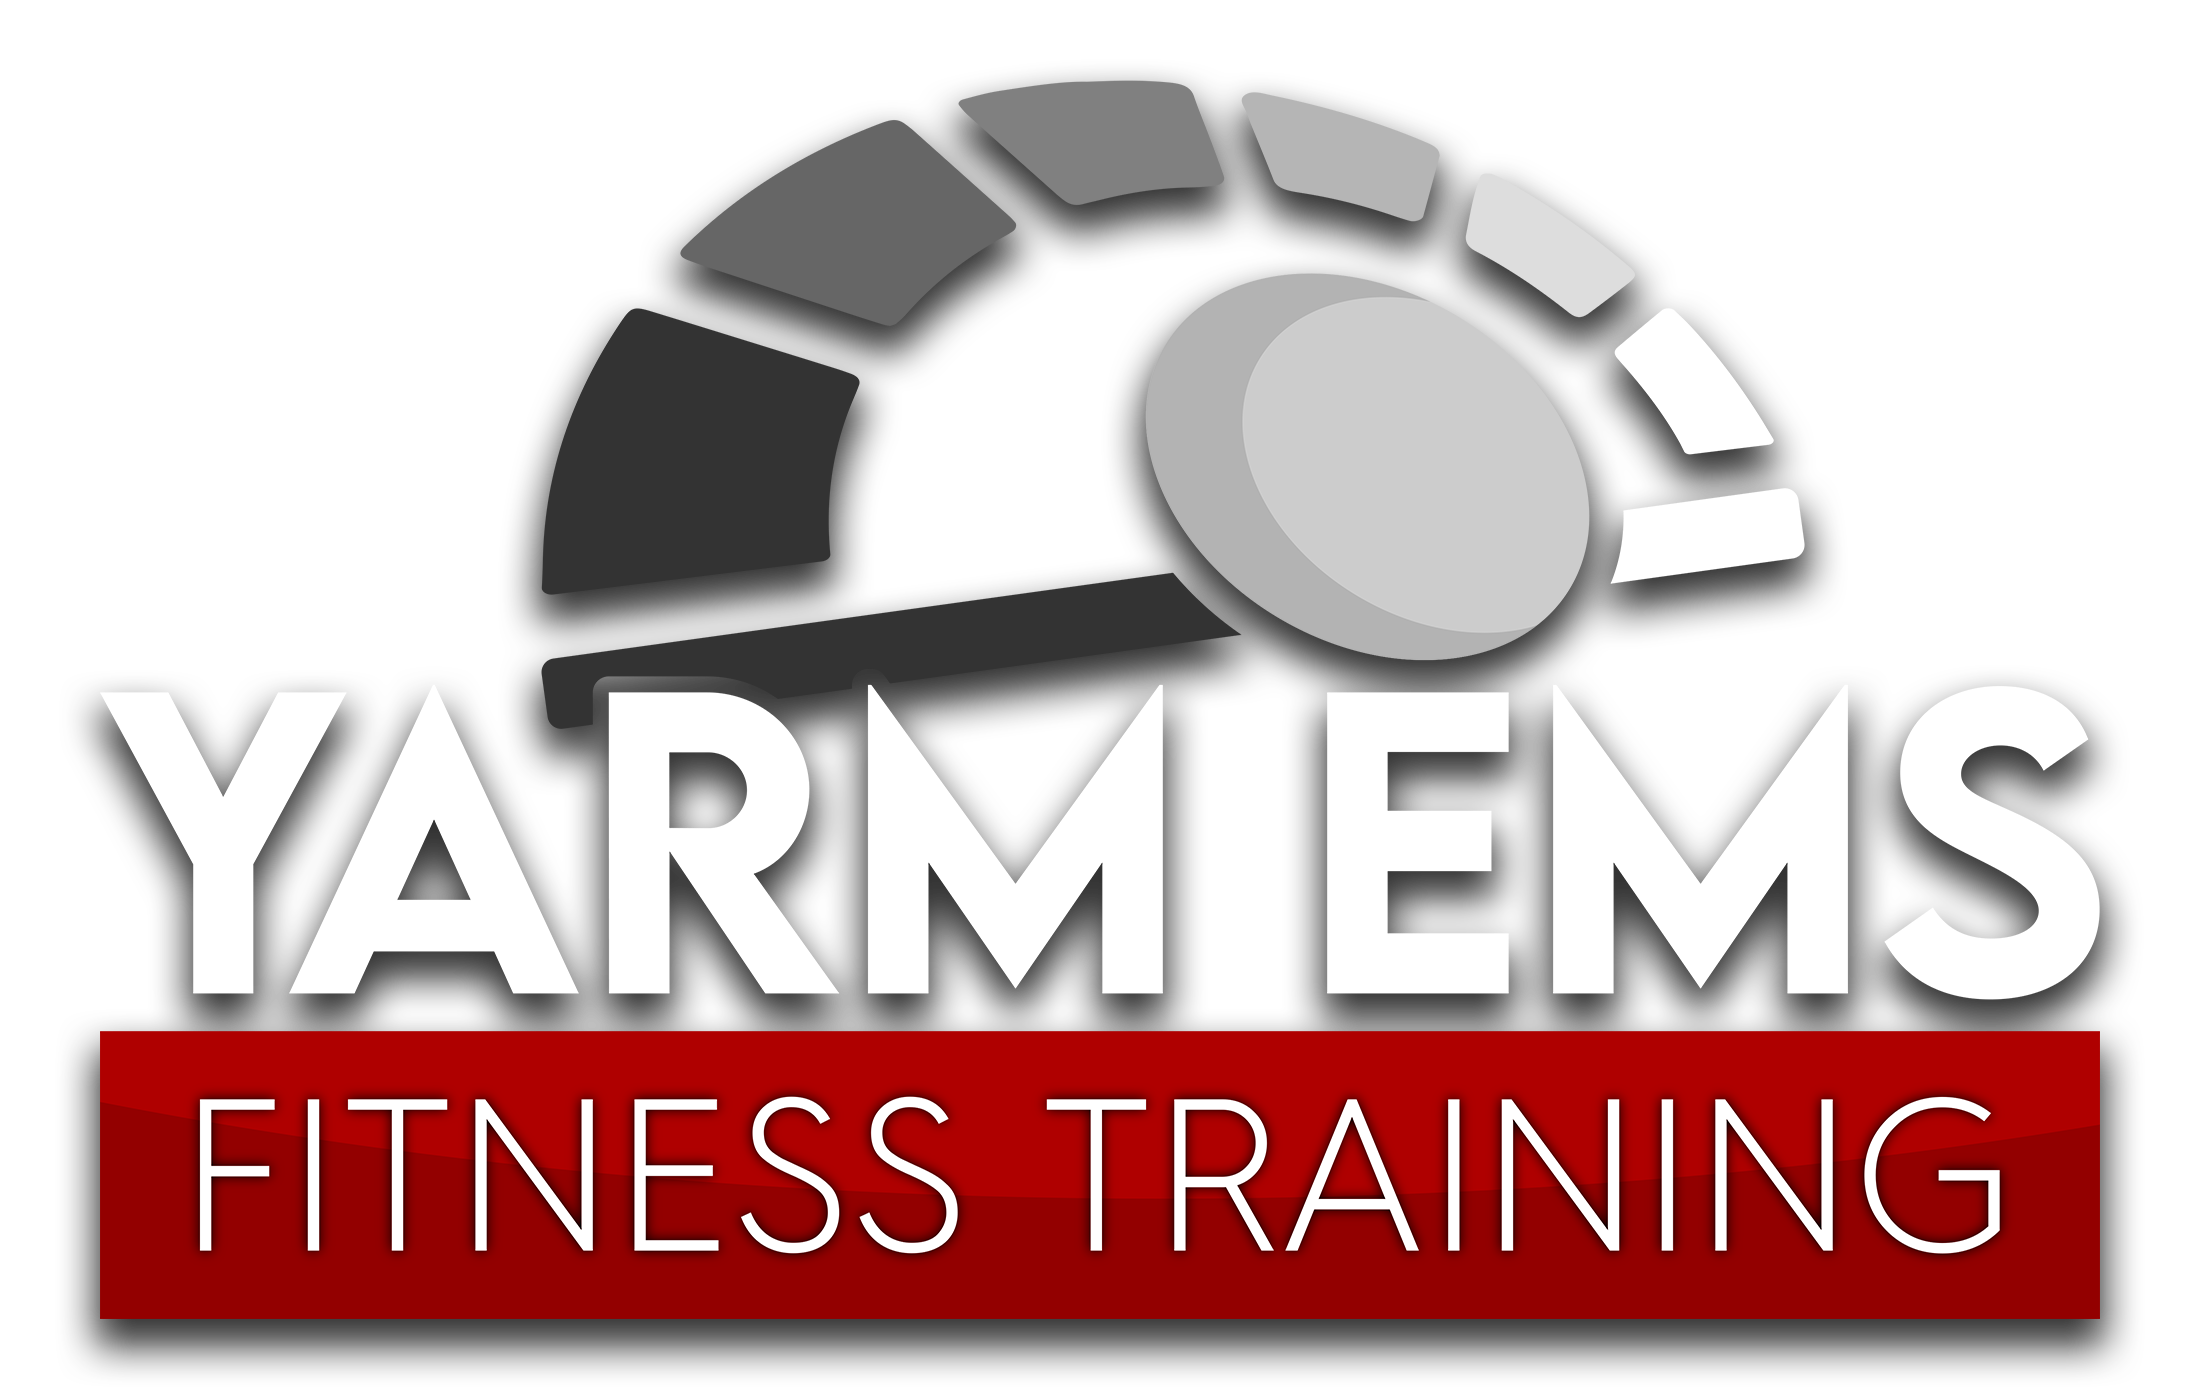 Yarm Ems Fitness Training Ltd. logo